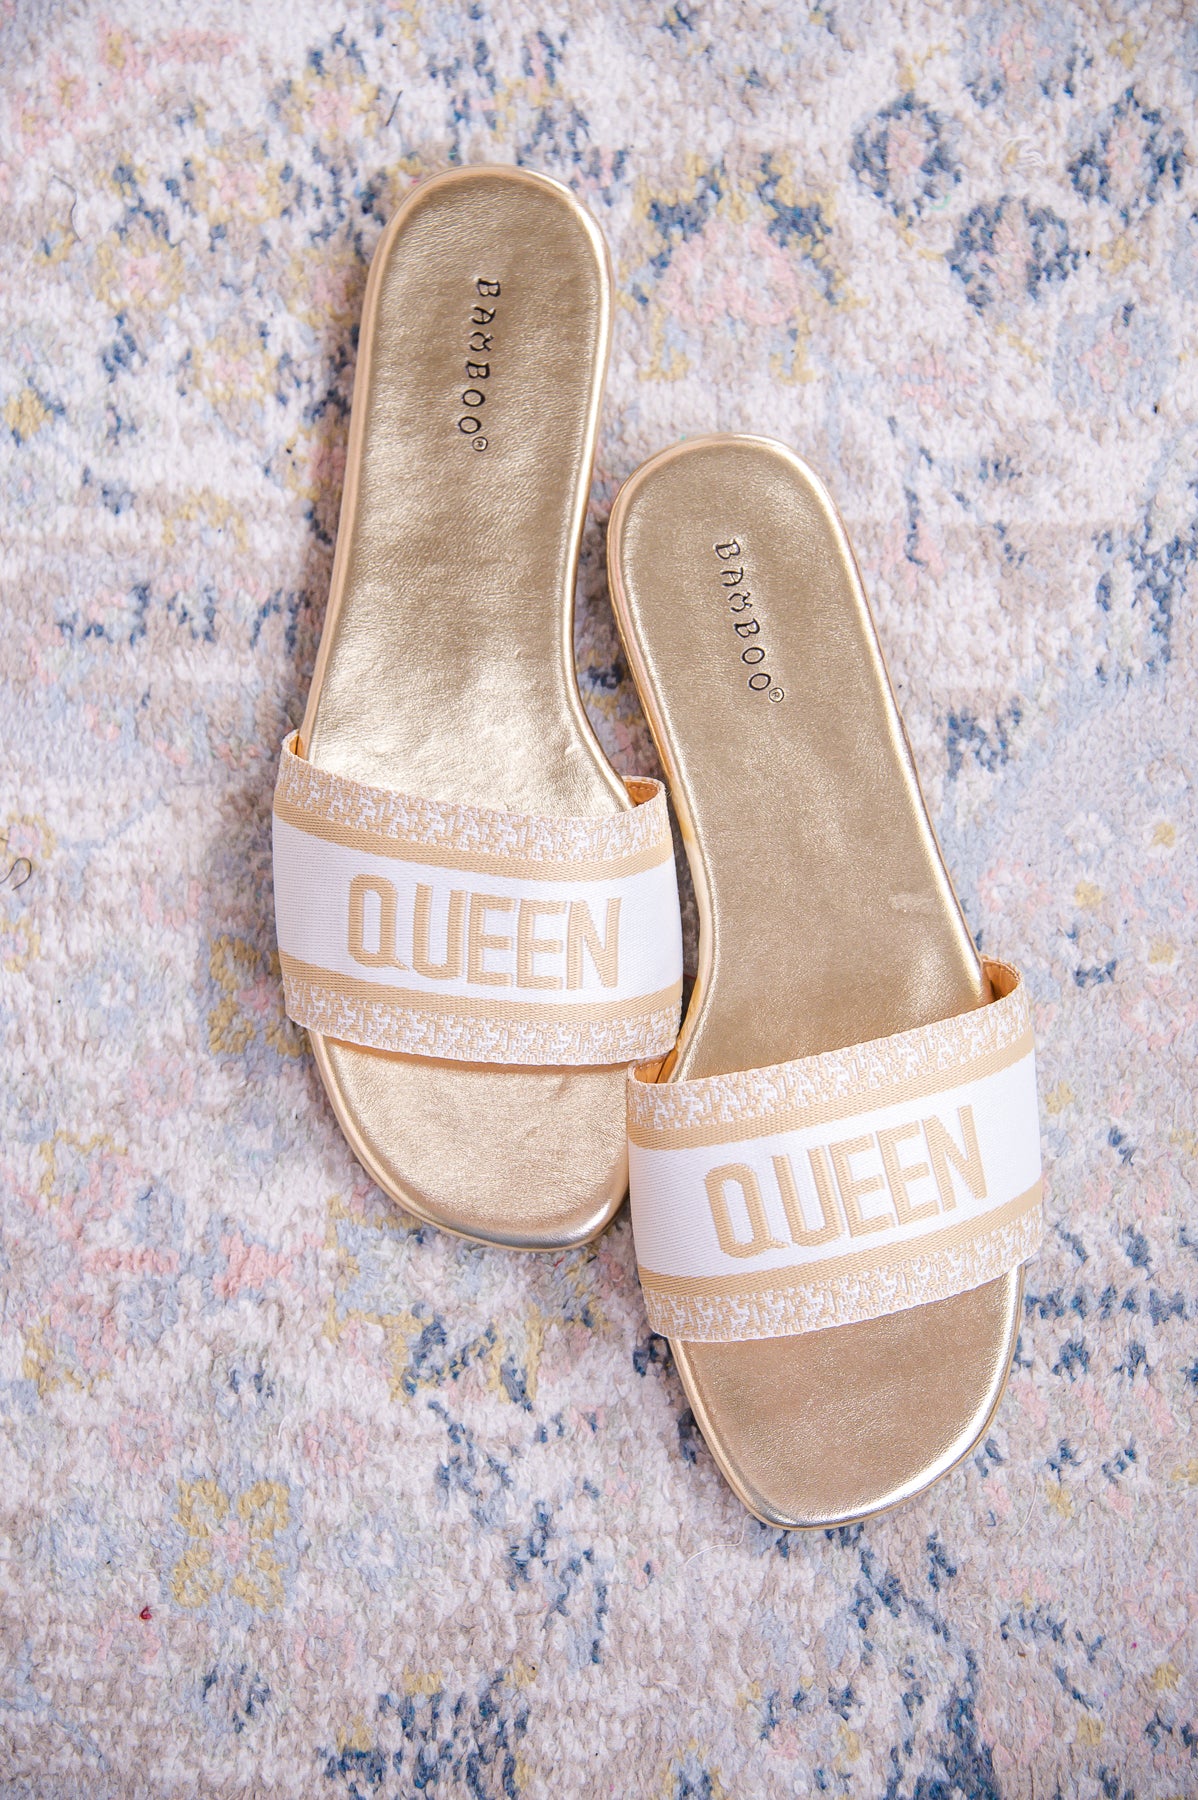 "Queen" Gold/White Slip On Sandals - SHO2597GO